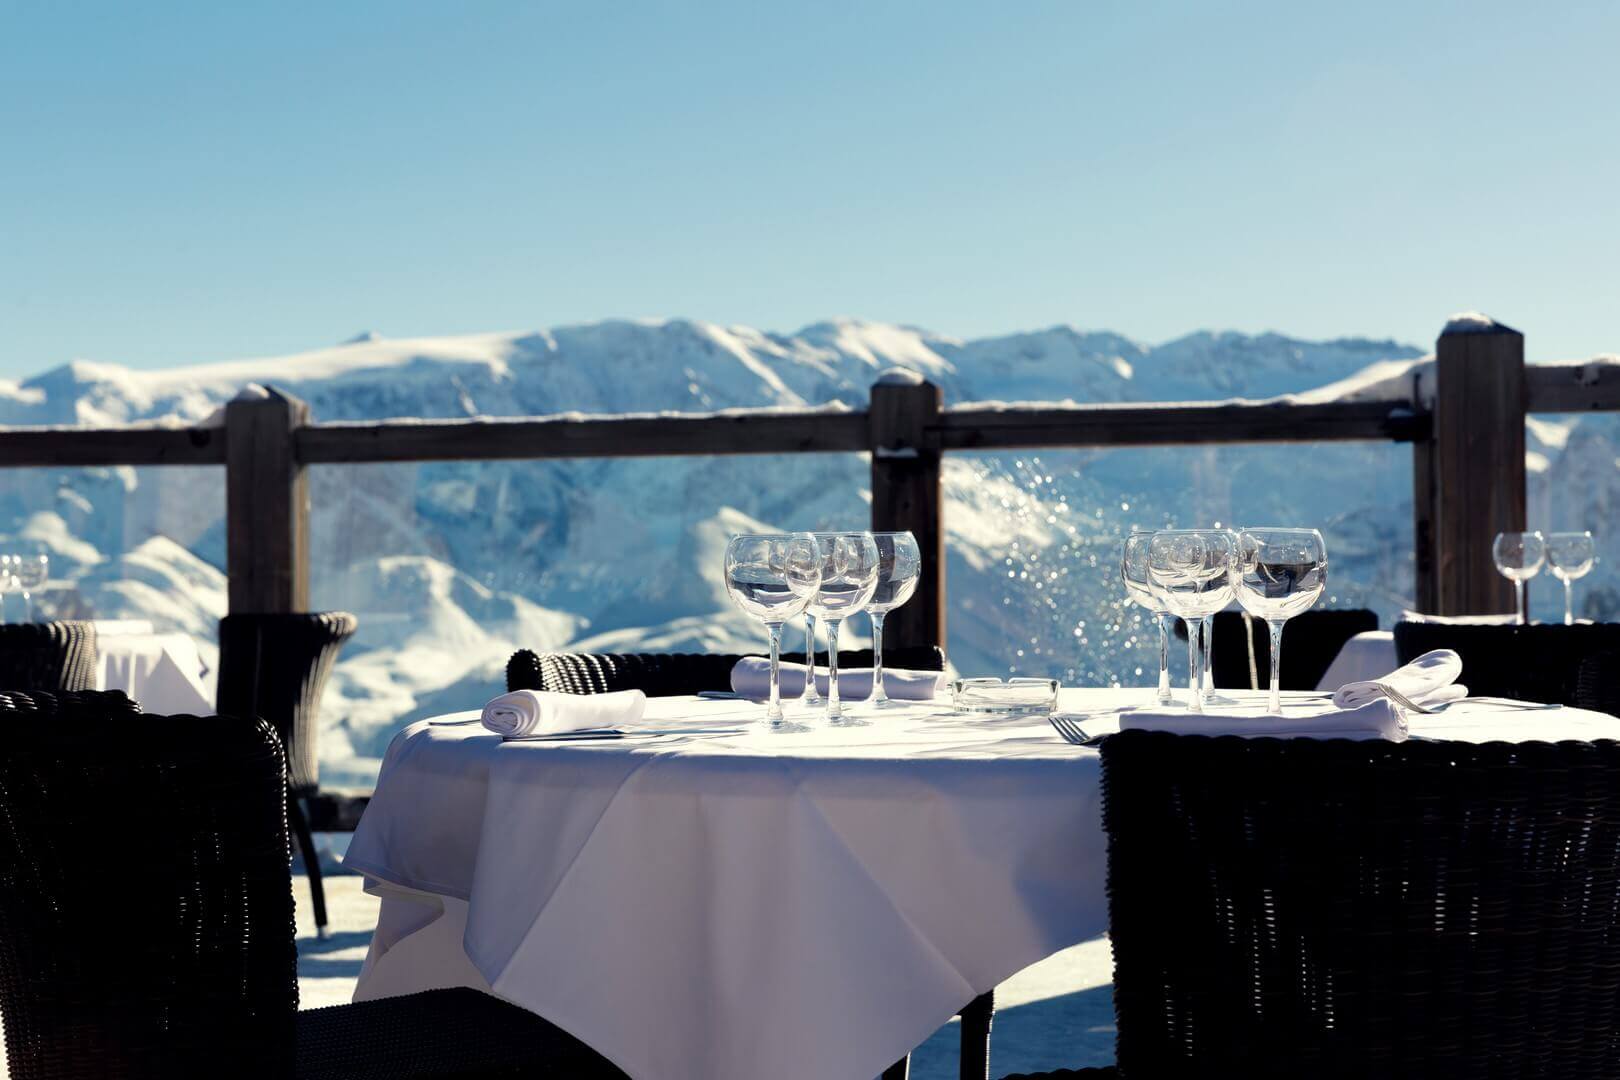 Alpine outdoor restaurant at ski resort in Alps, France
